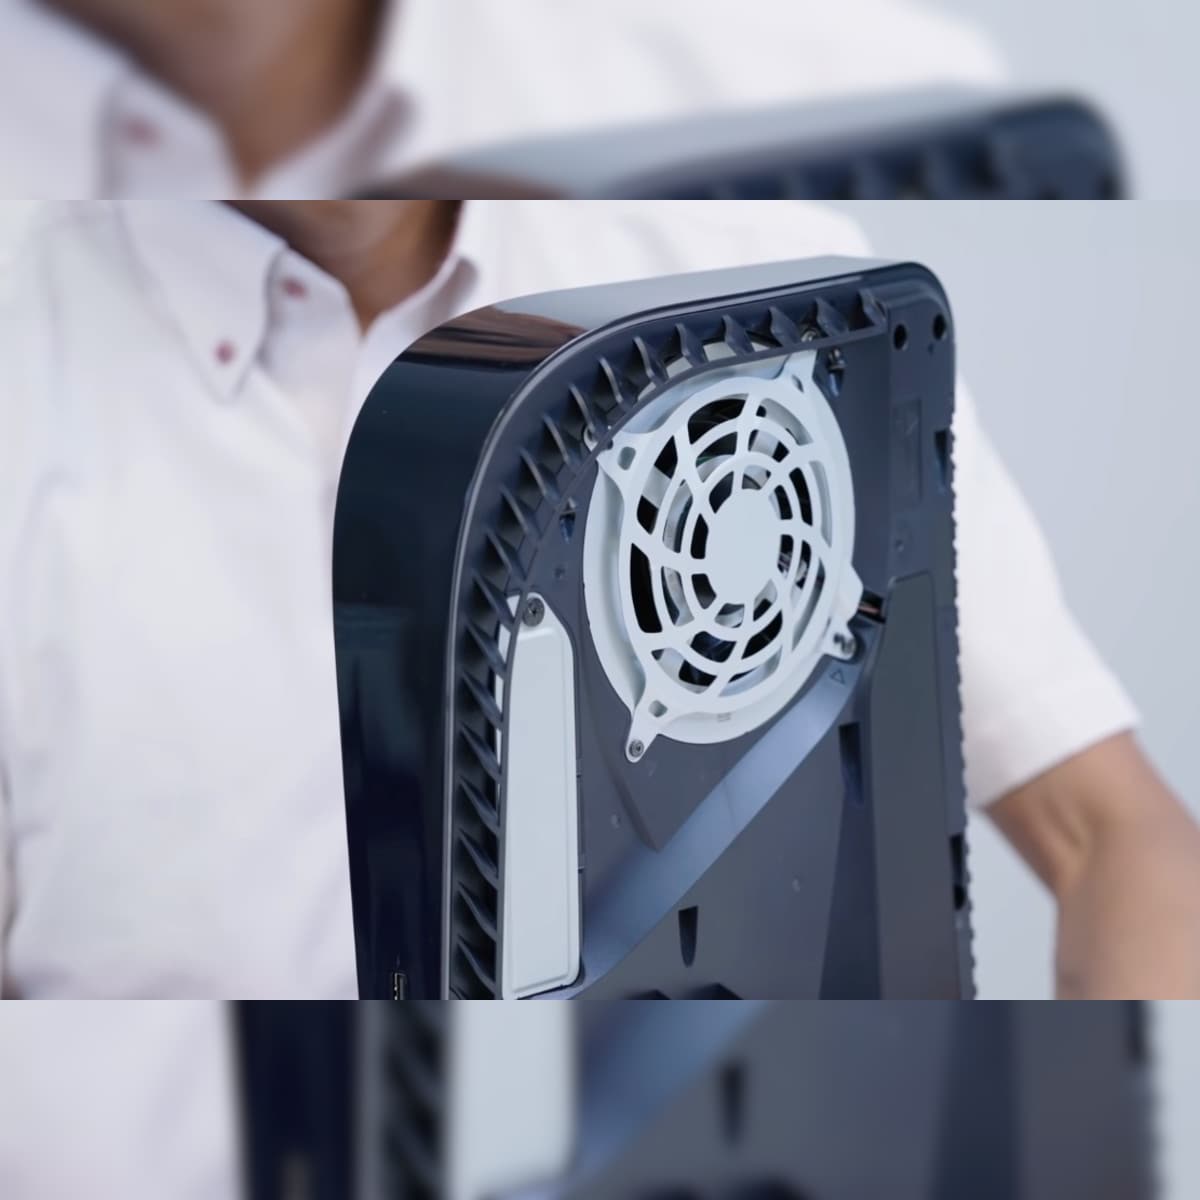 Kompatibel med På jorden radius Sony PS5 Cooling Fan Will Work Based on Temperature Sensors and Game Data